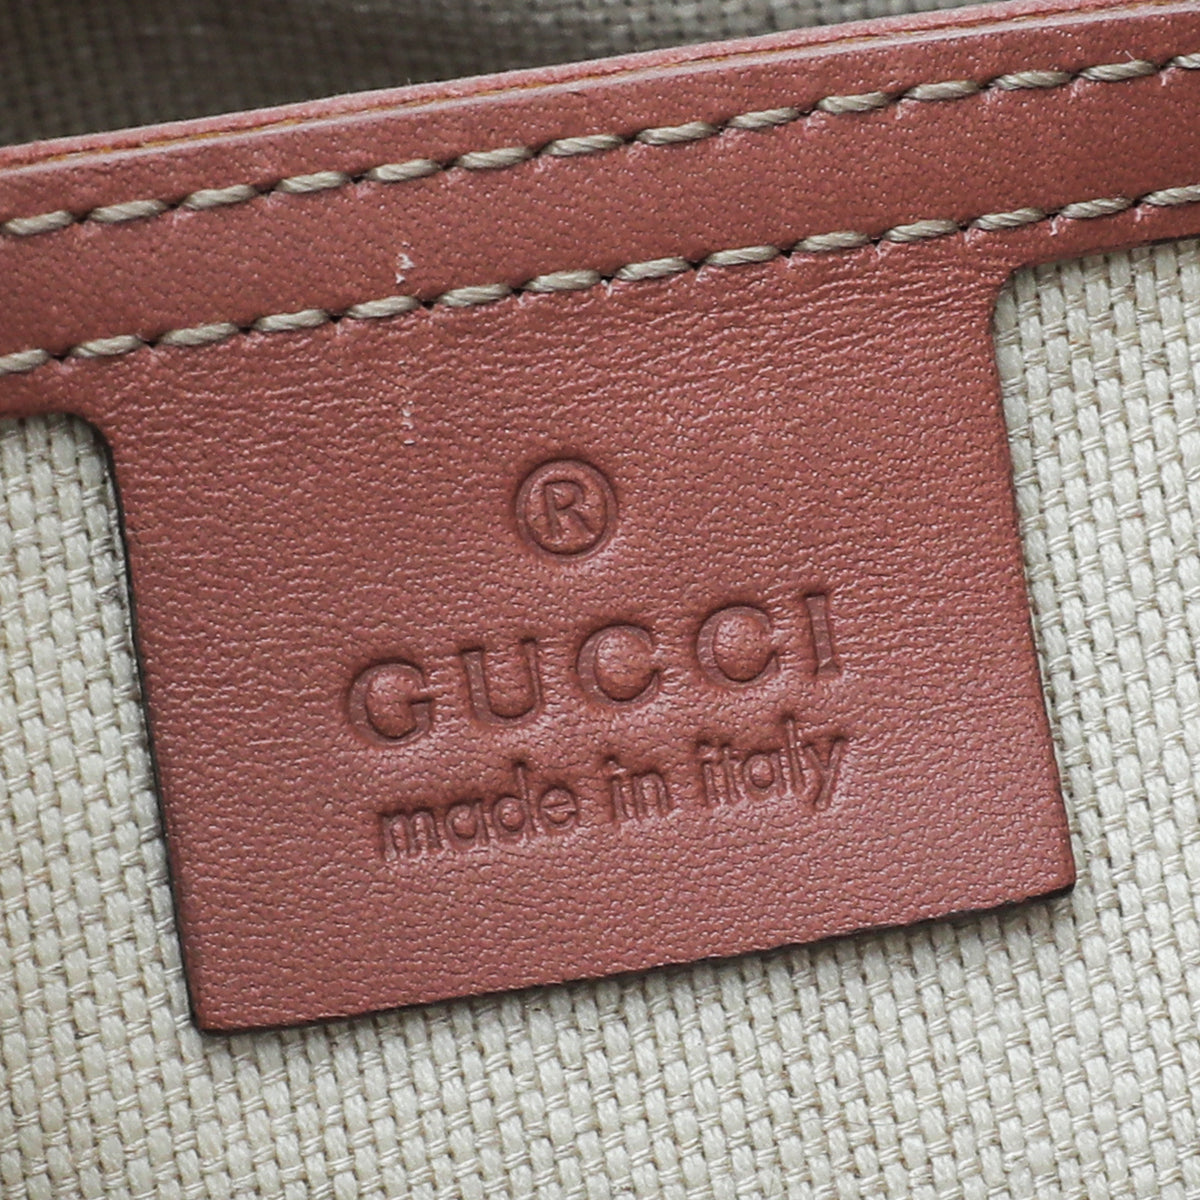 Gucci Bicolor GG Star Flat Messenger Bag